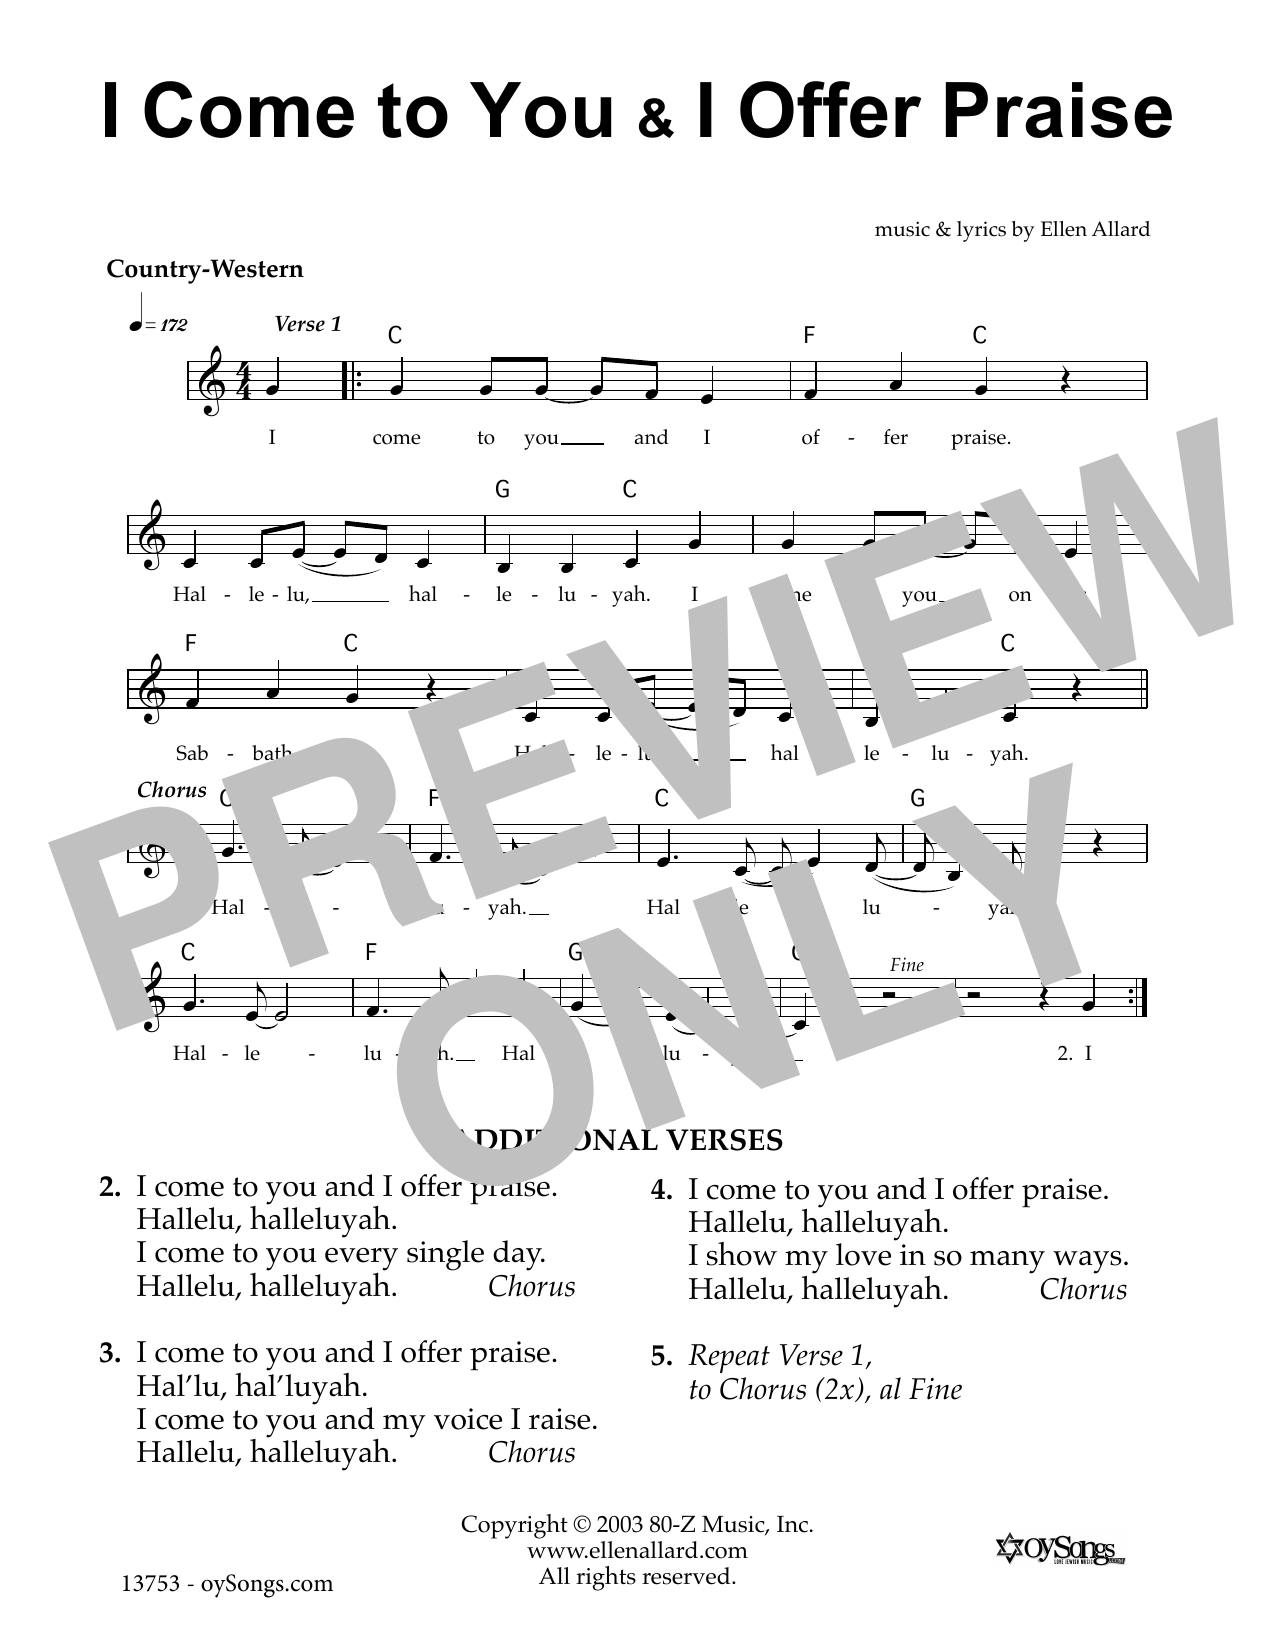 Ellen Allard I Come To You Offer Praise Sheet Music Notes & Chords for Melody Line, Lyrics & Chords - Download or Print PDF